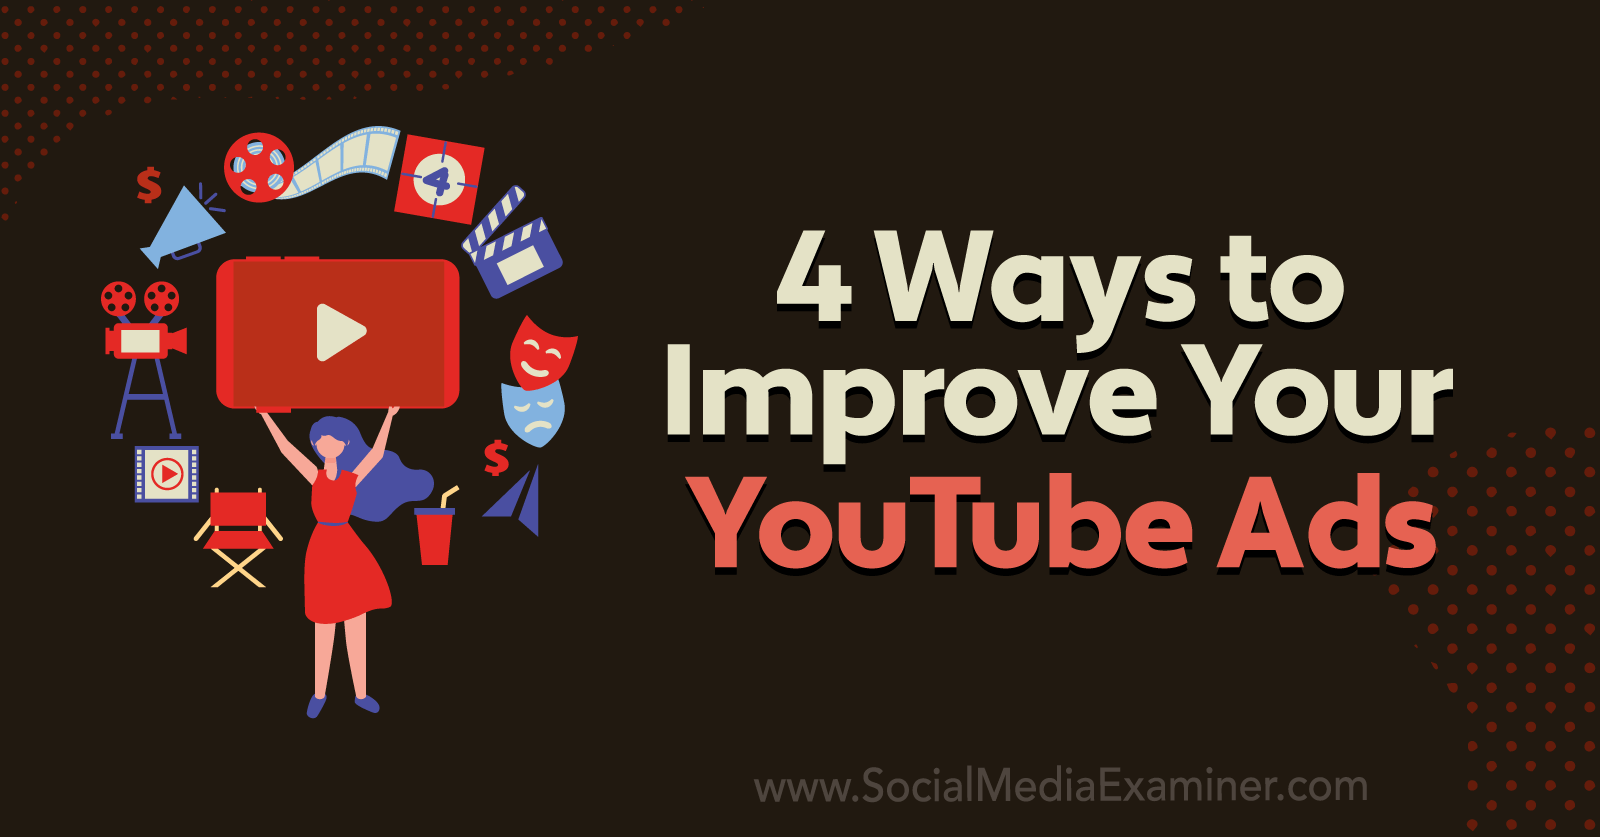 4 Ways to Improve Your YouTube Ads by Joe Martinez